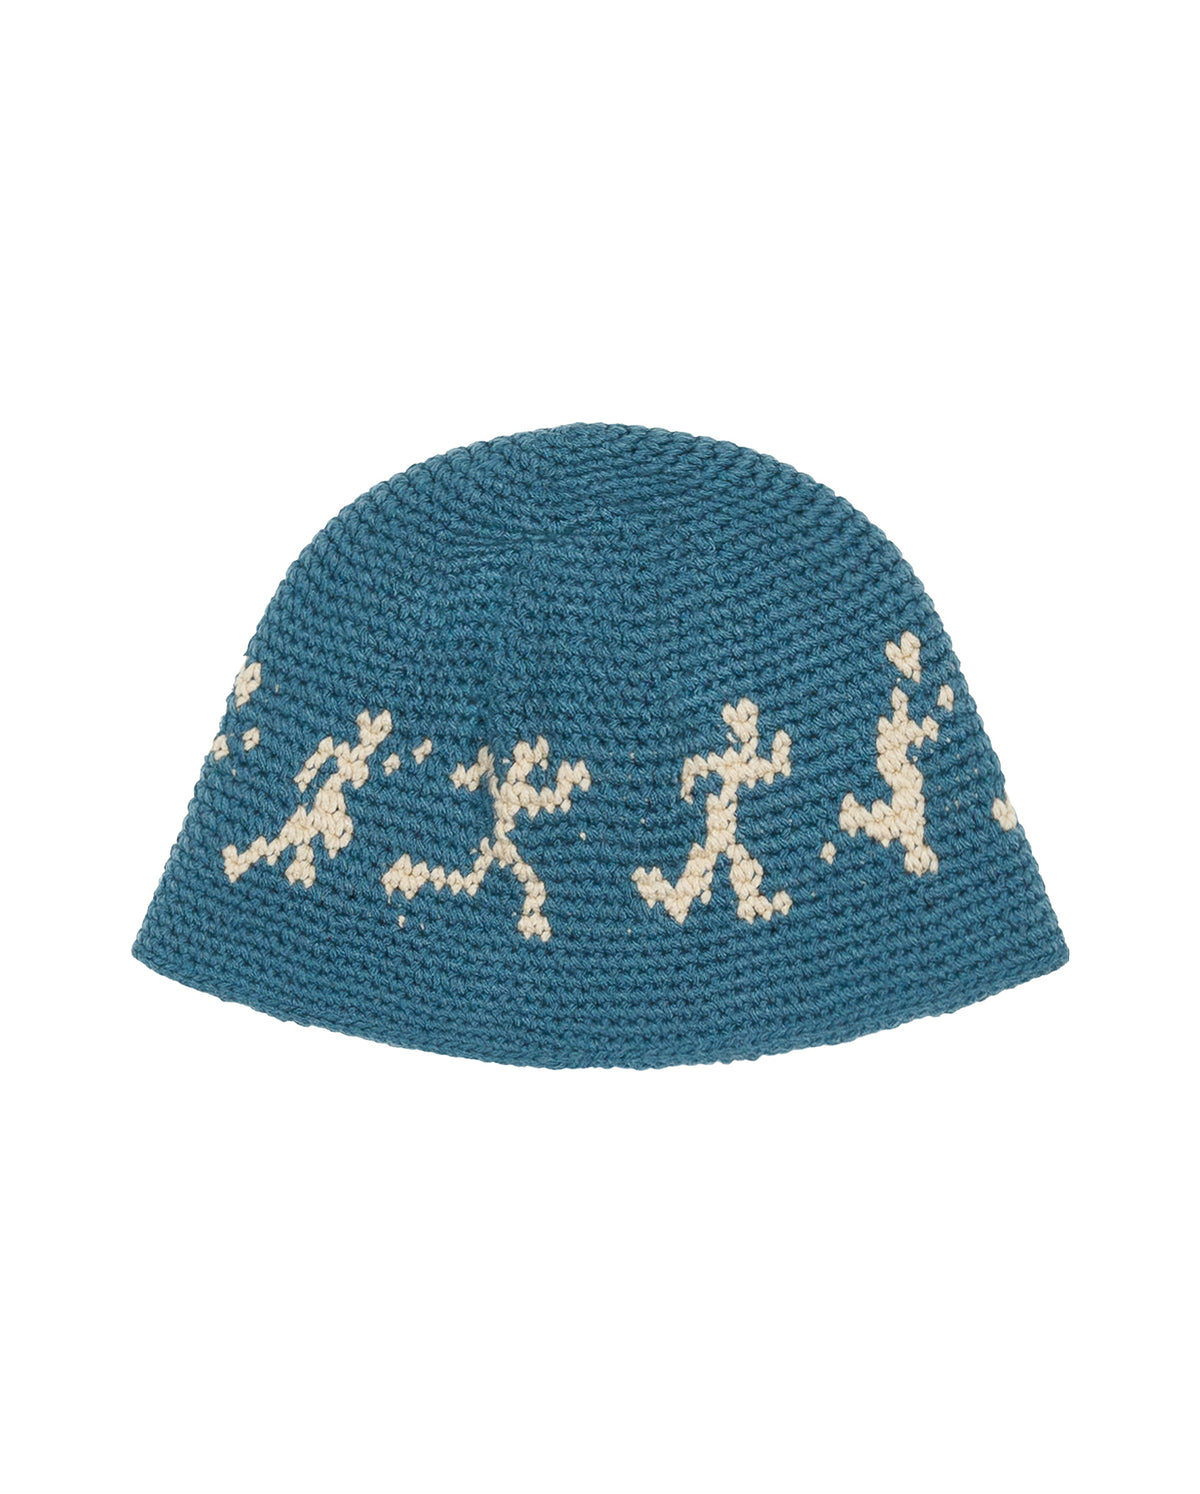 Running Guy Crochet Hat - Blue